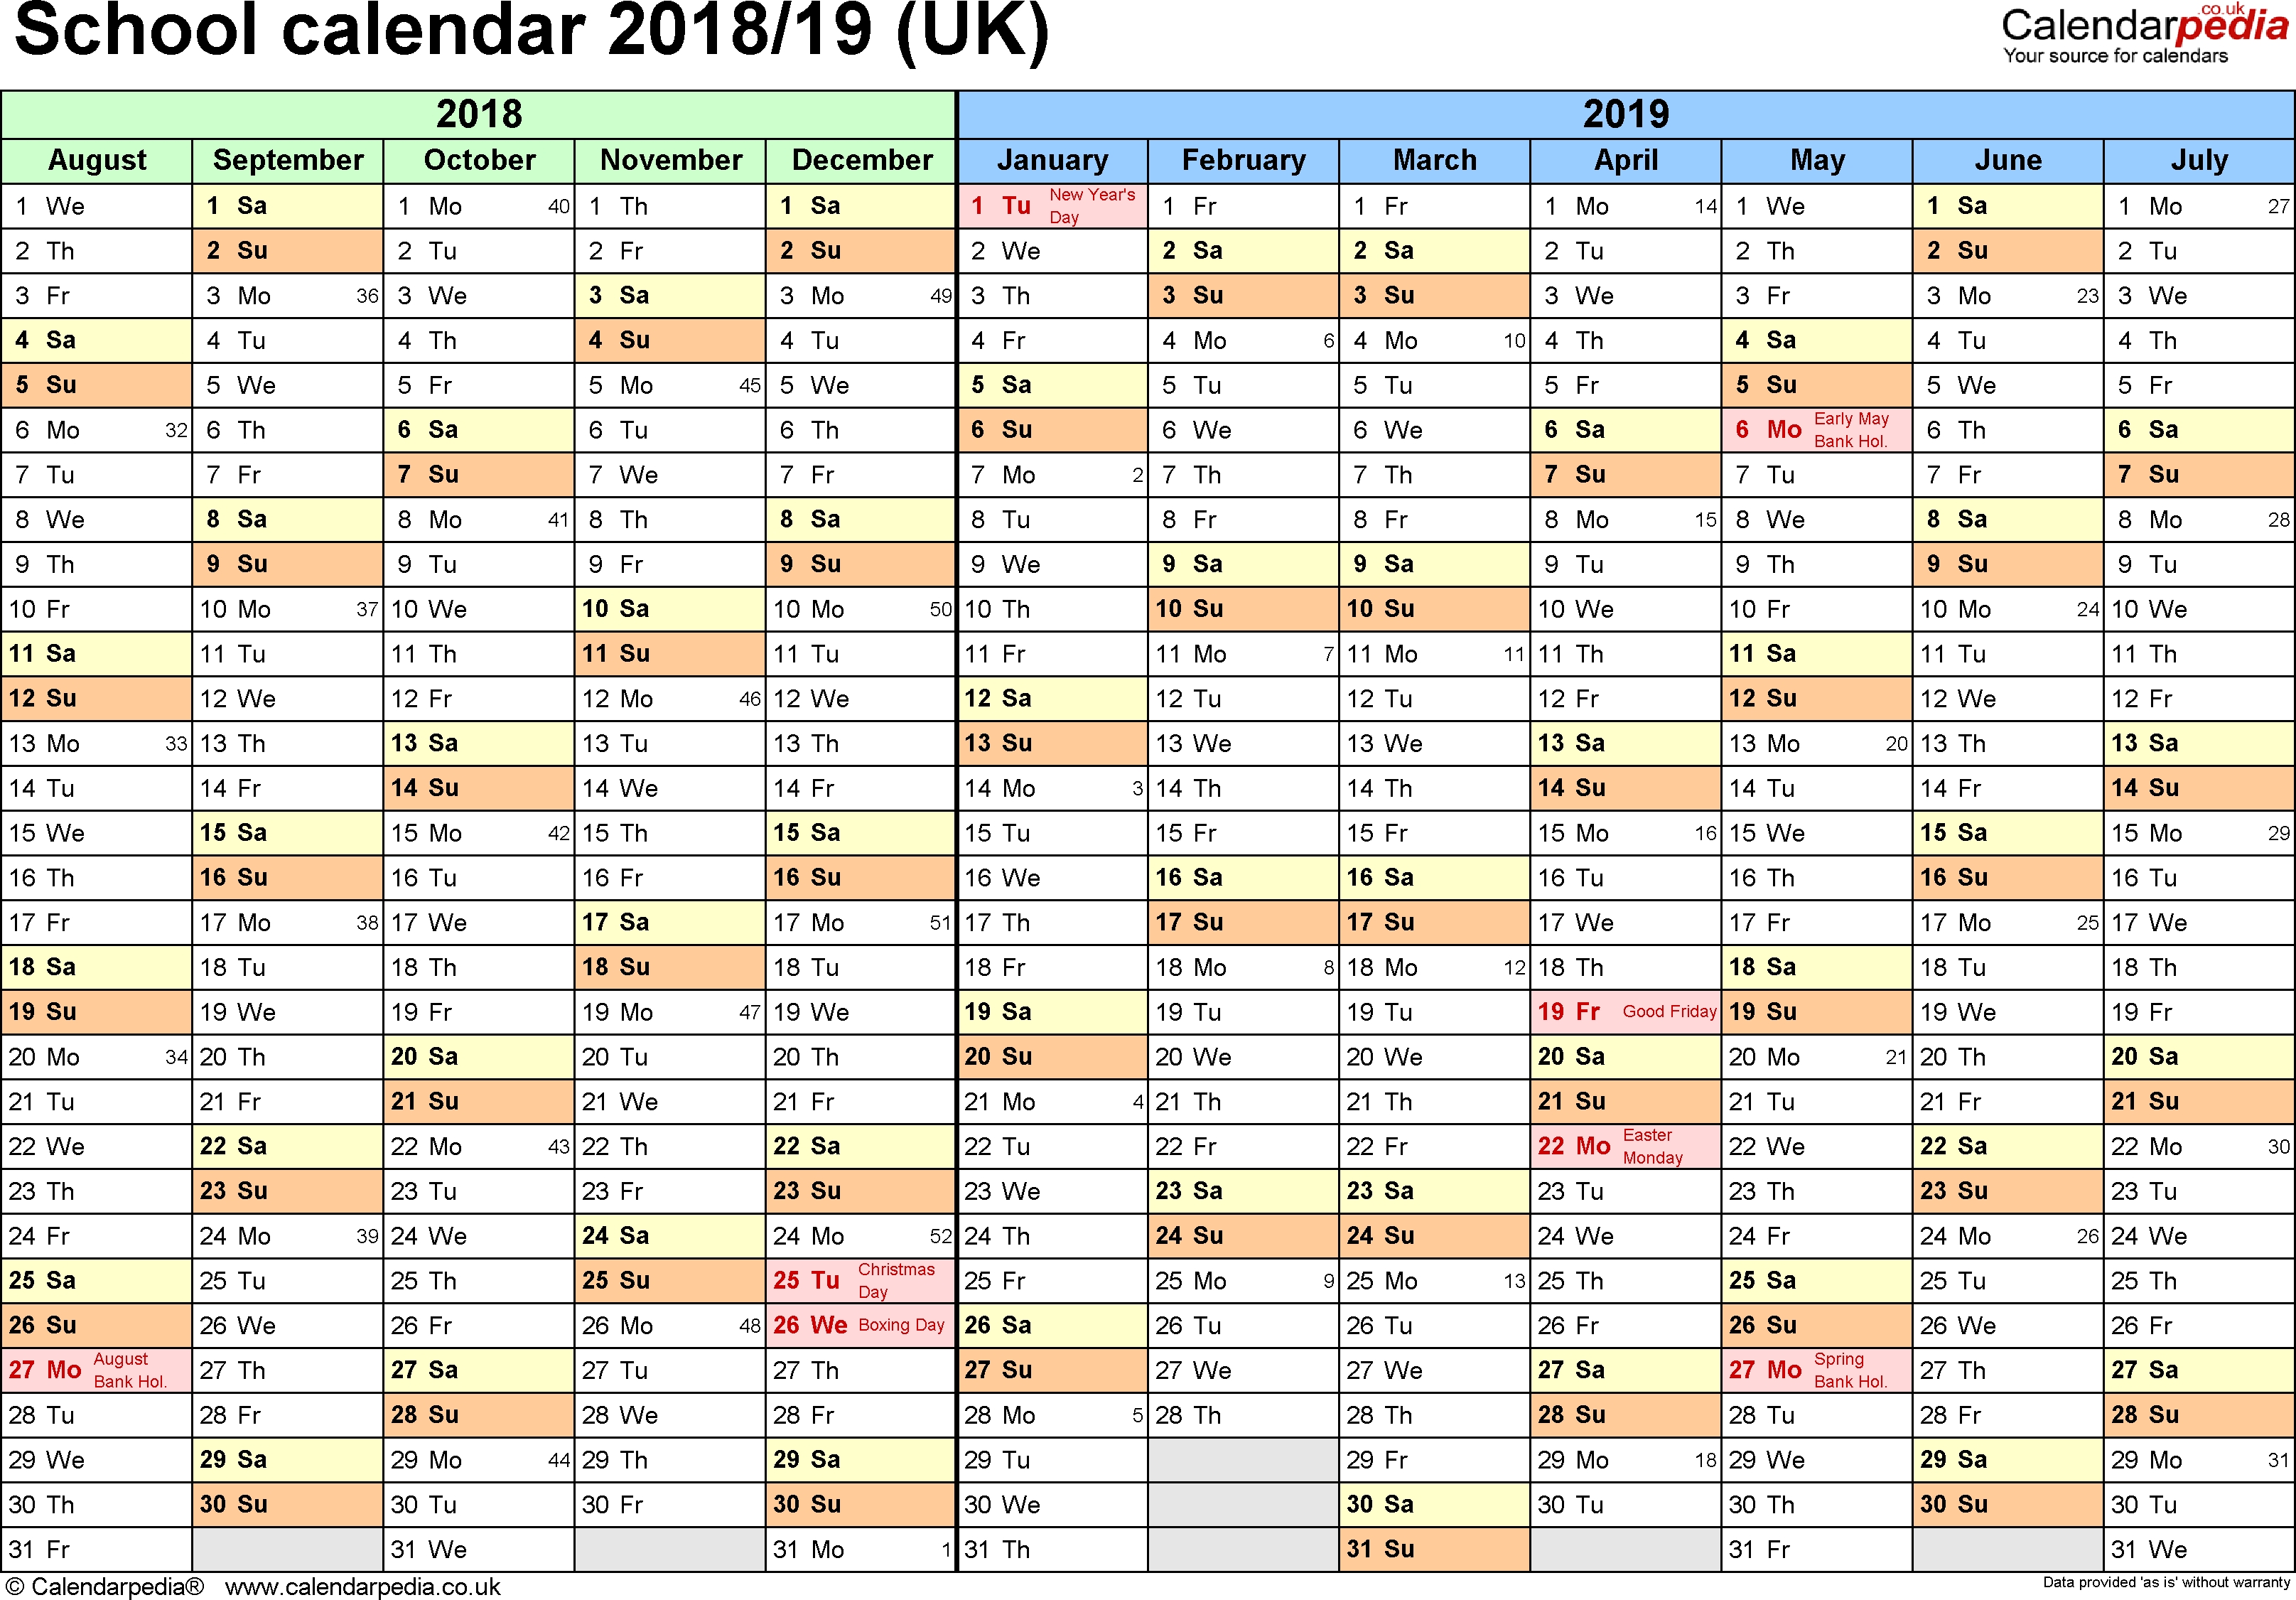 School Calendars 2018/2019 As Free Printable Excel Templates Calendar School 2019 Uk